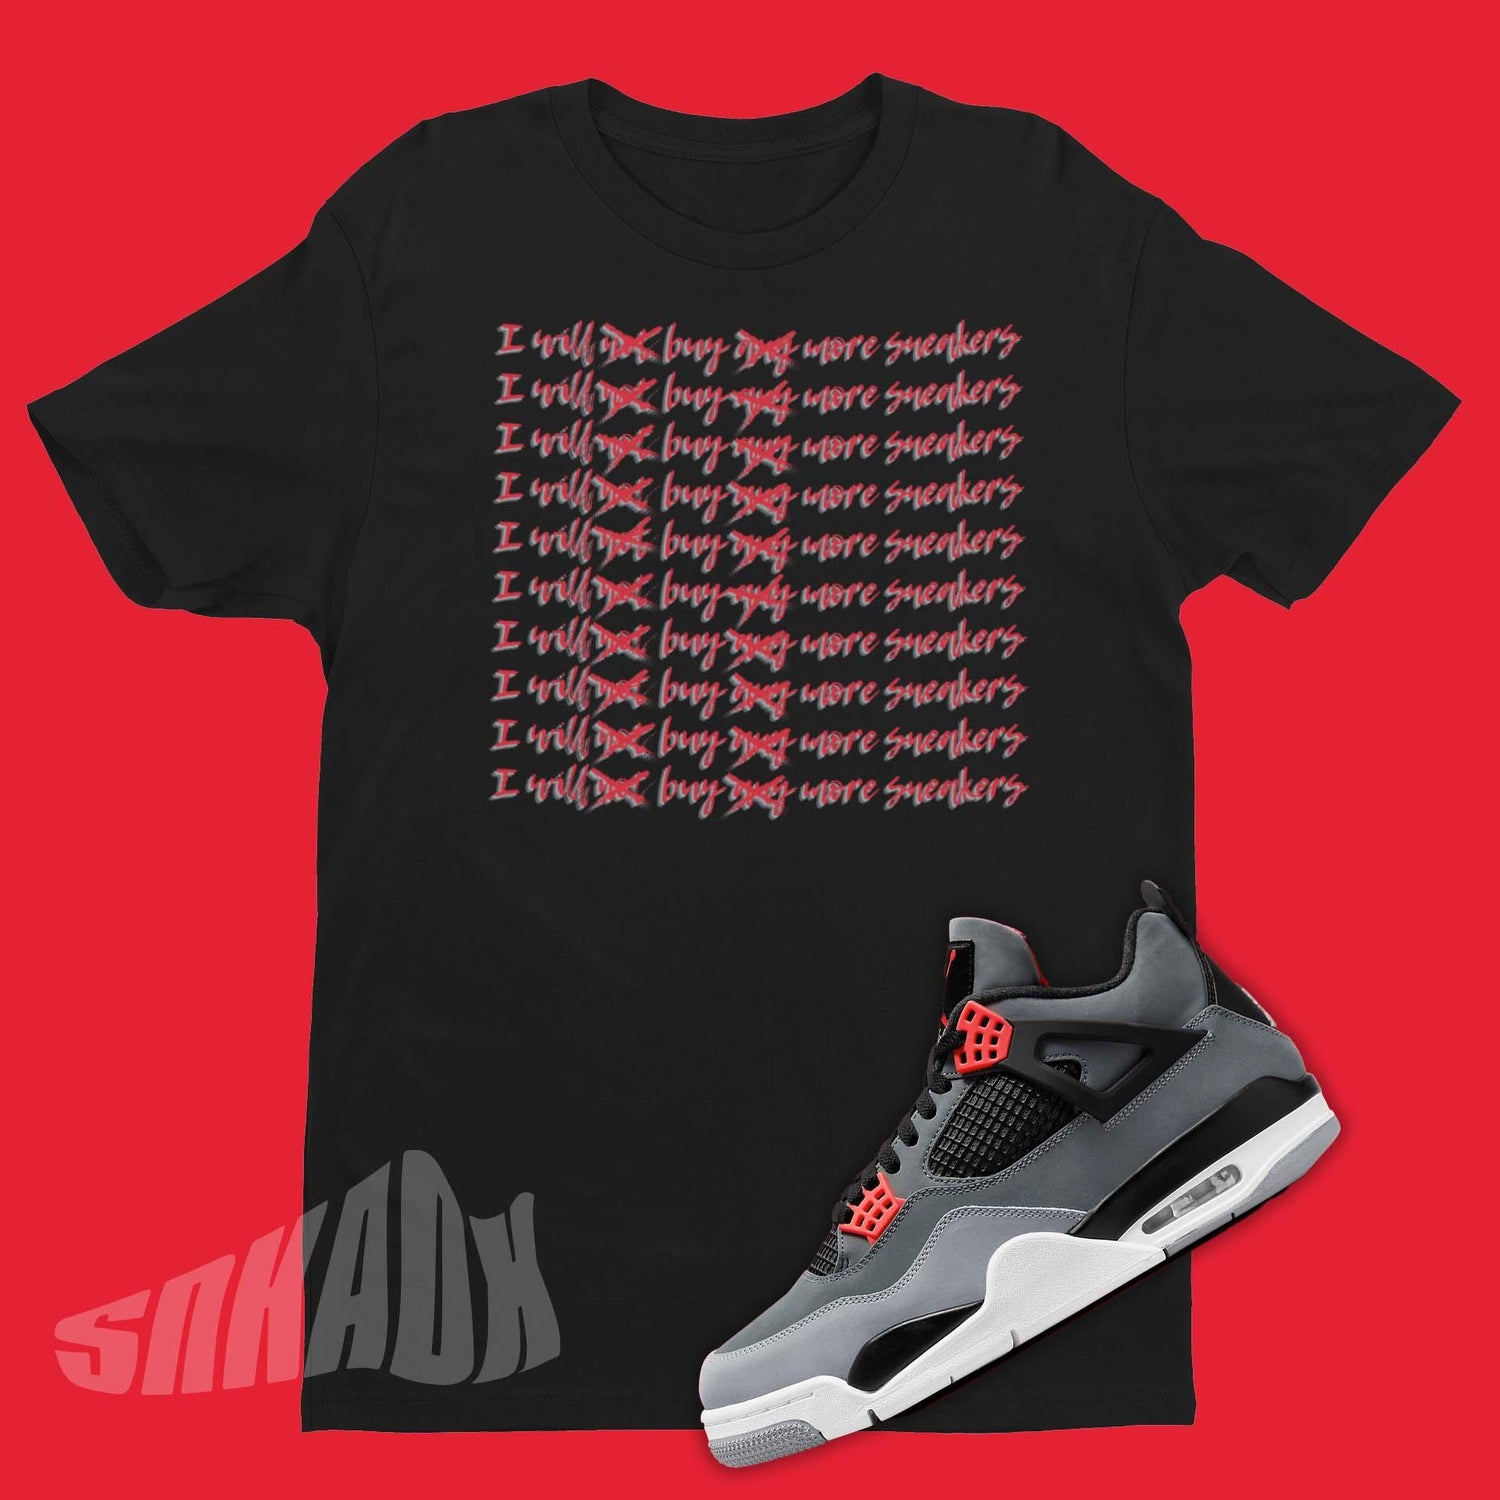 Funny Shirt To Match Air Jordan 4 Infrared 23